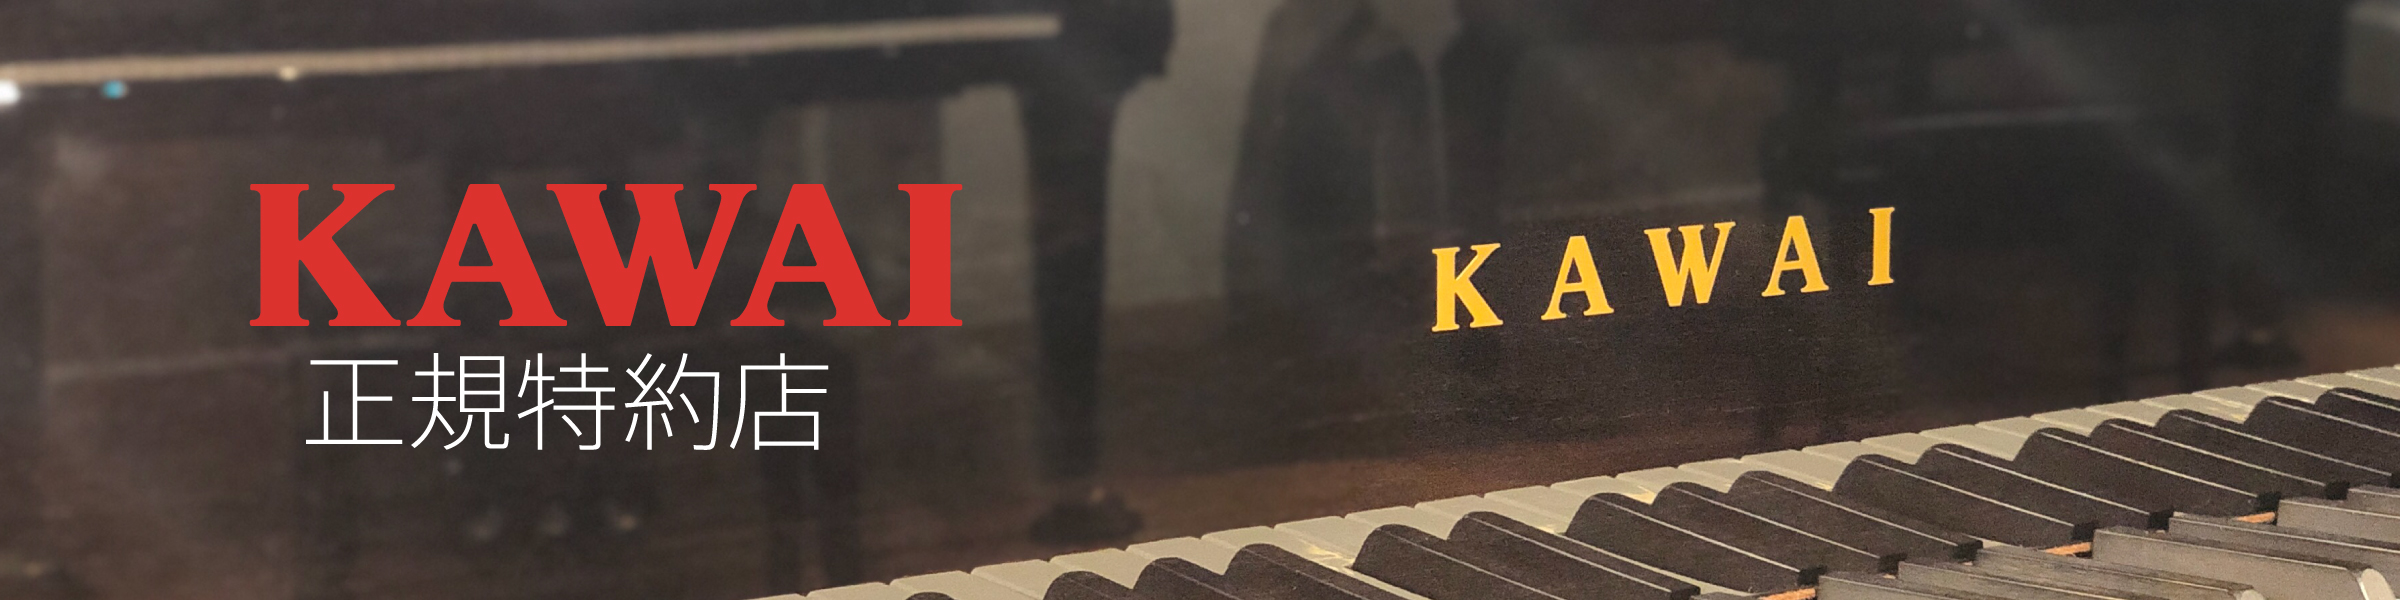 KAWAI カタログページ - ムサシ楽器：新品/中古ピアノ販売・買取り 